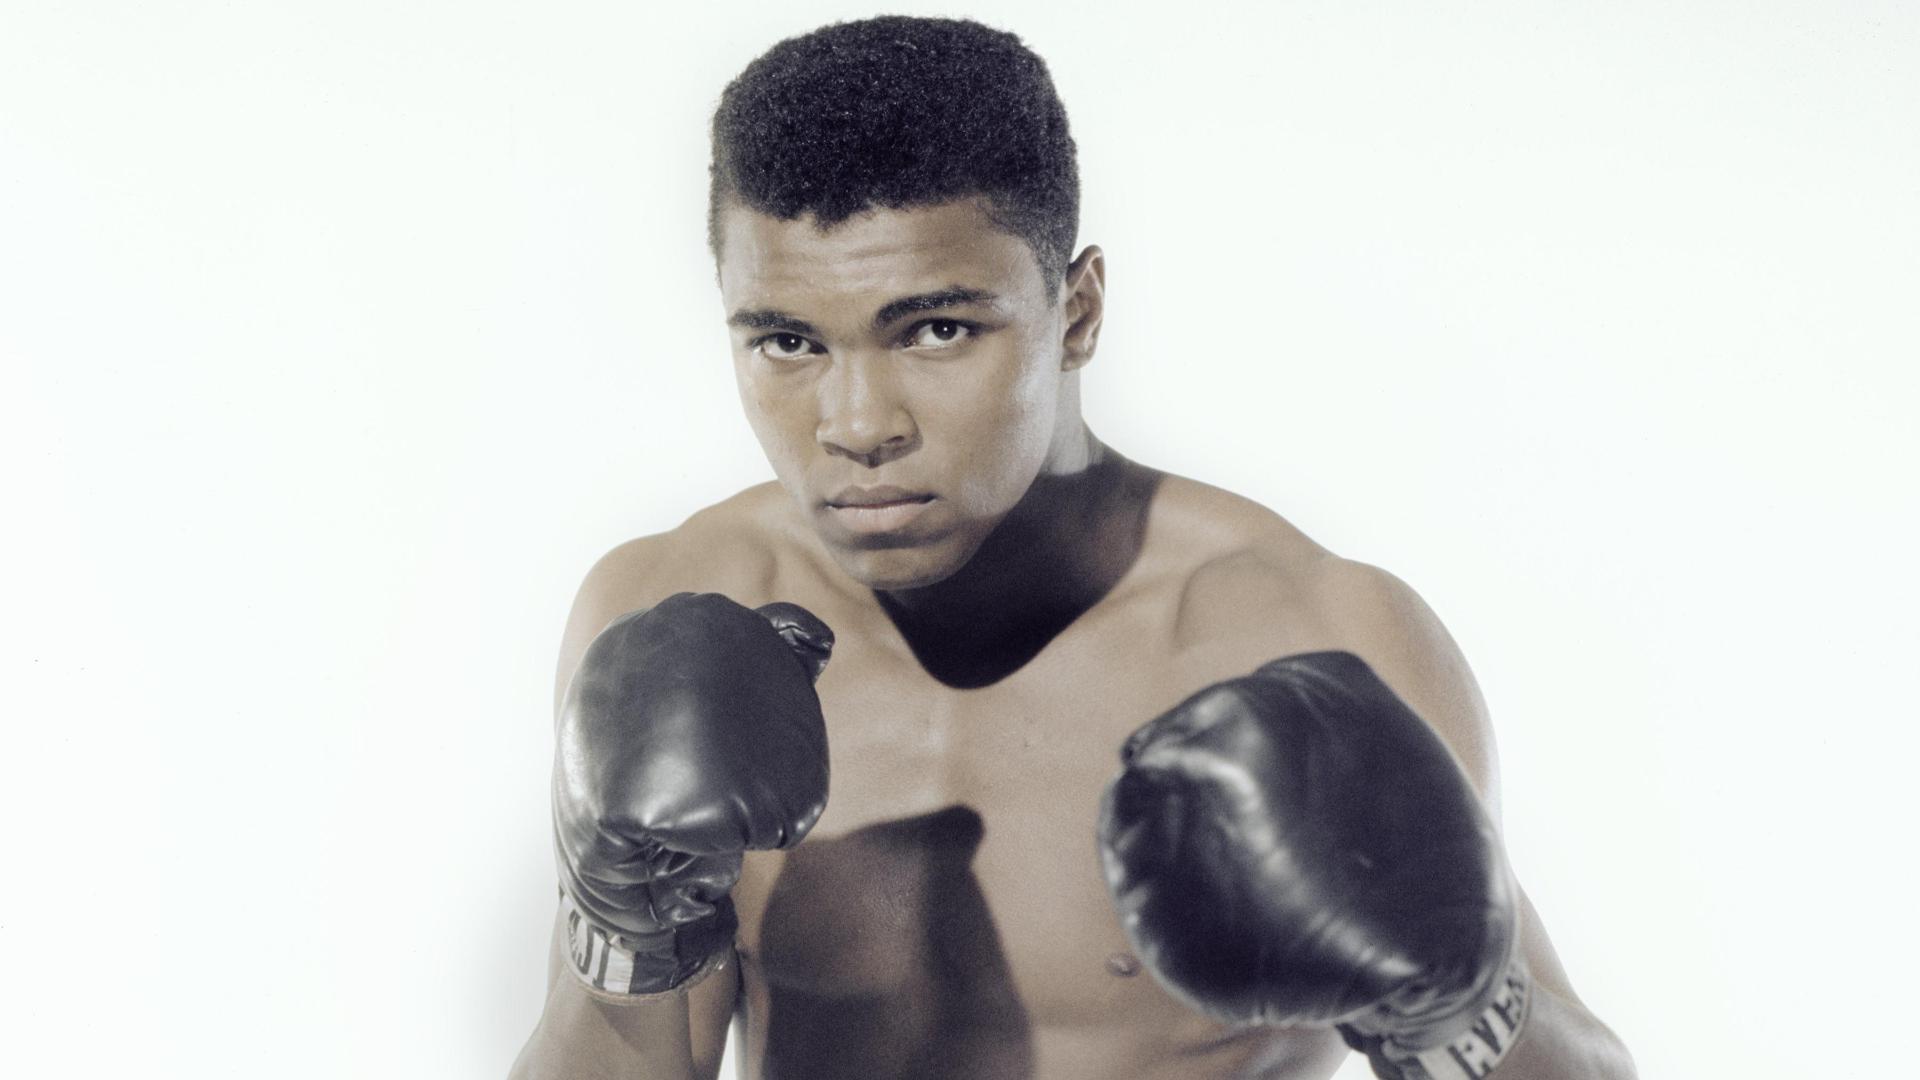 Muhammad Ali passes